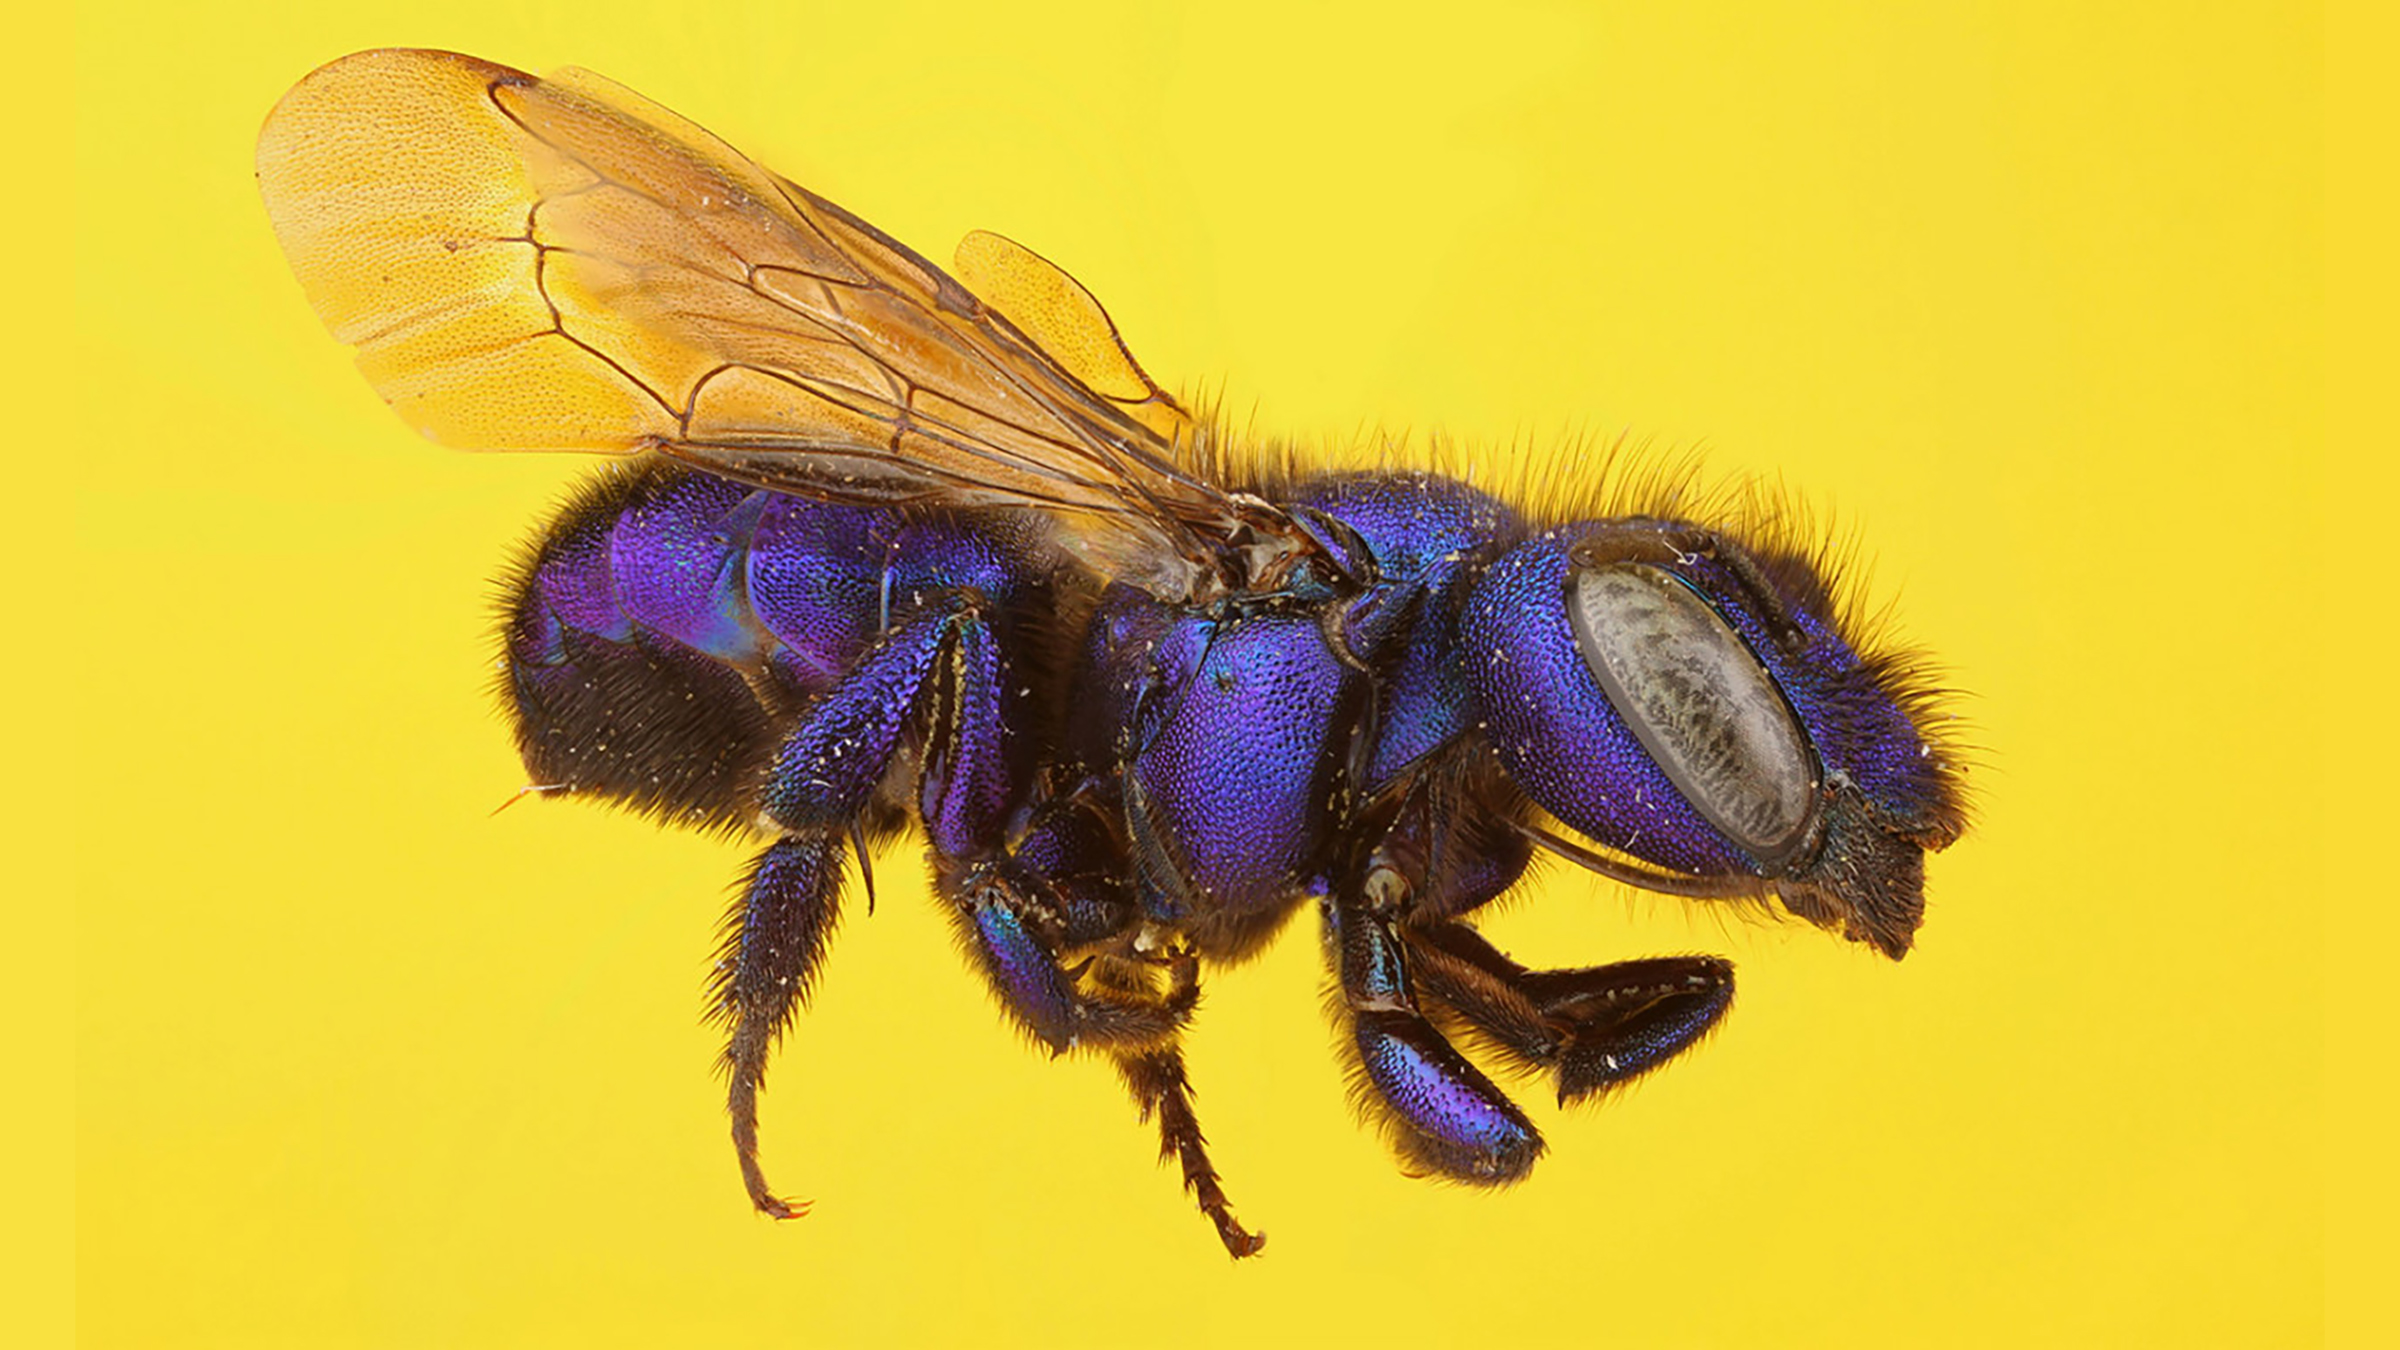 A purple bee